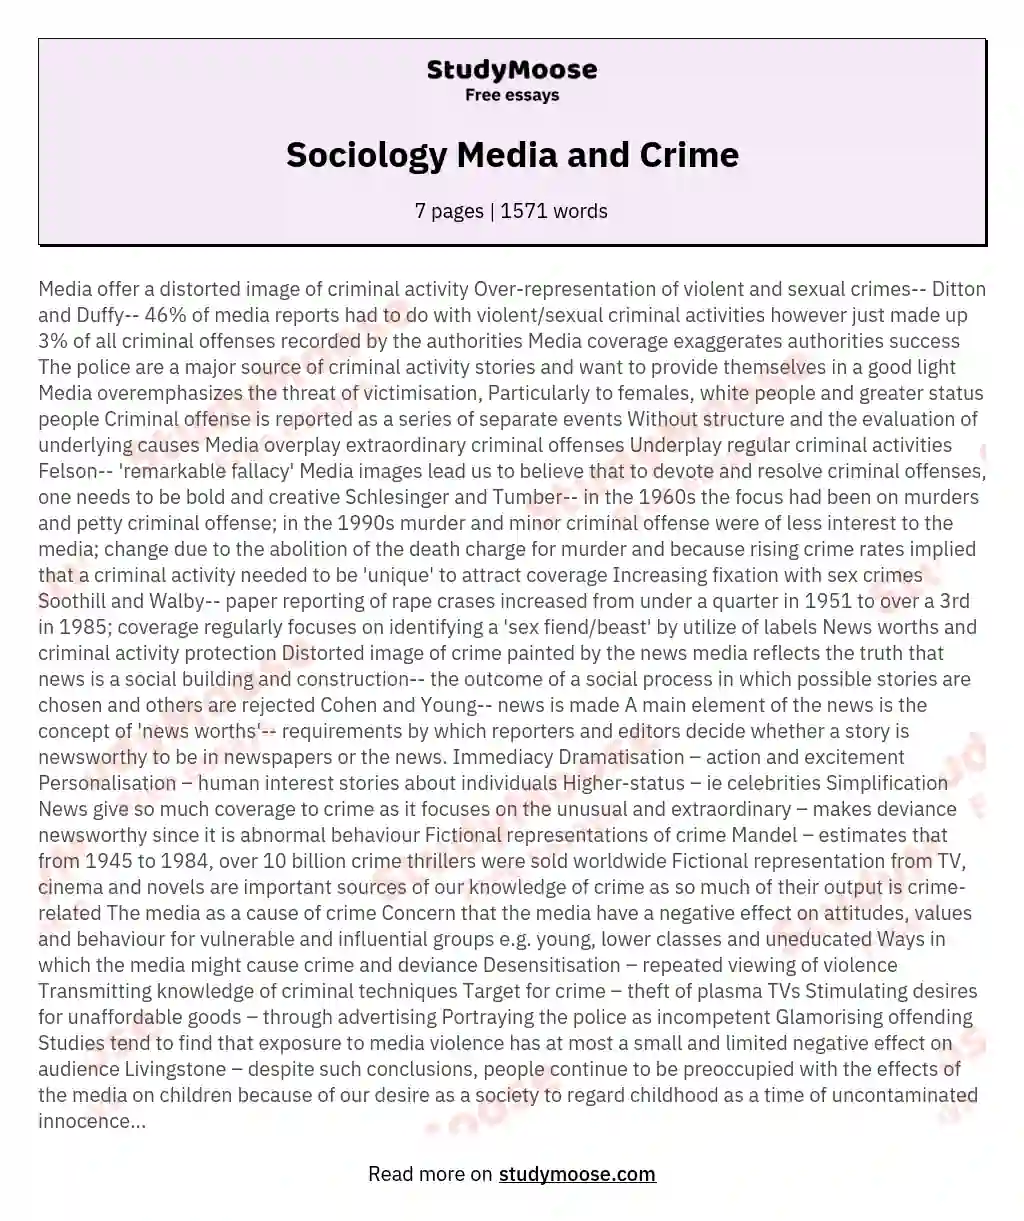 Sociology Media and Crime essay